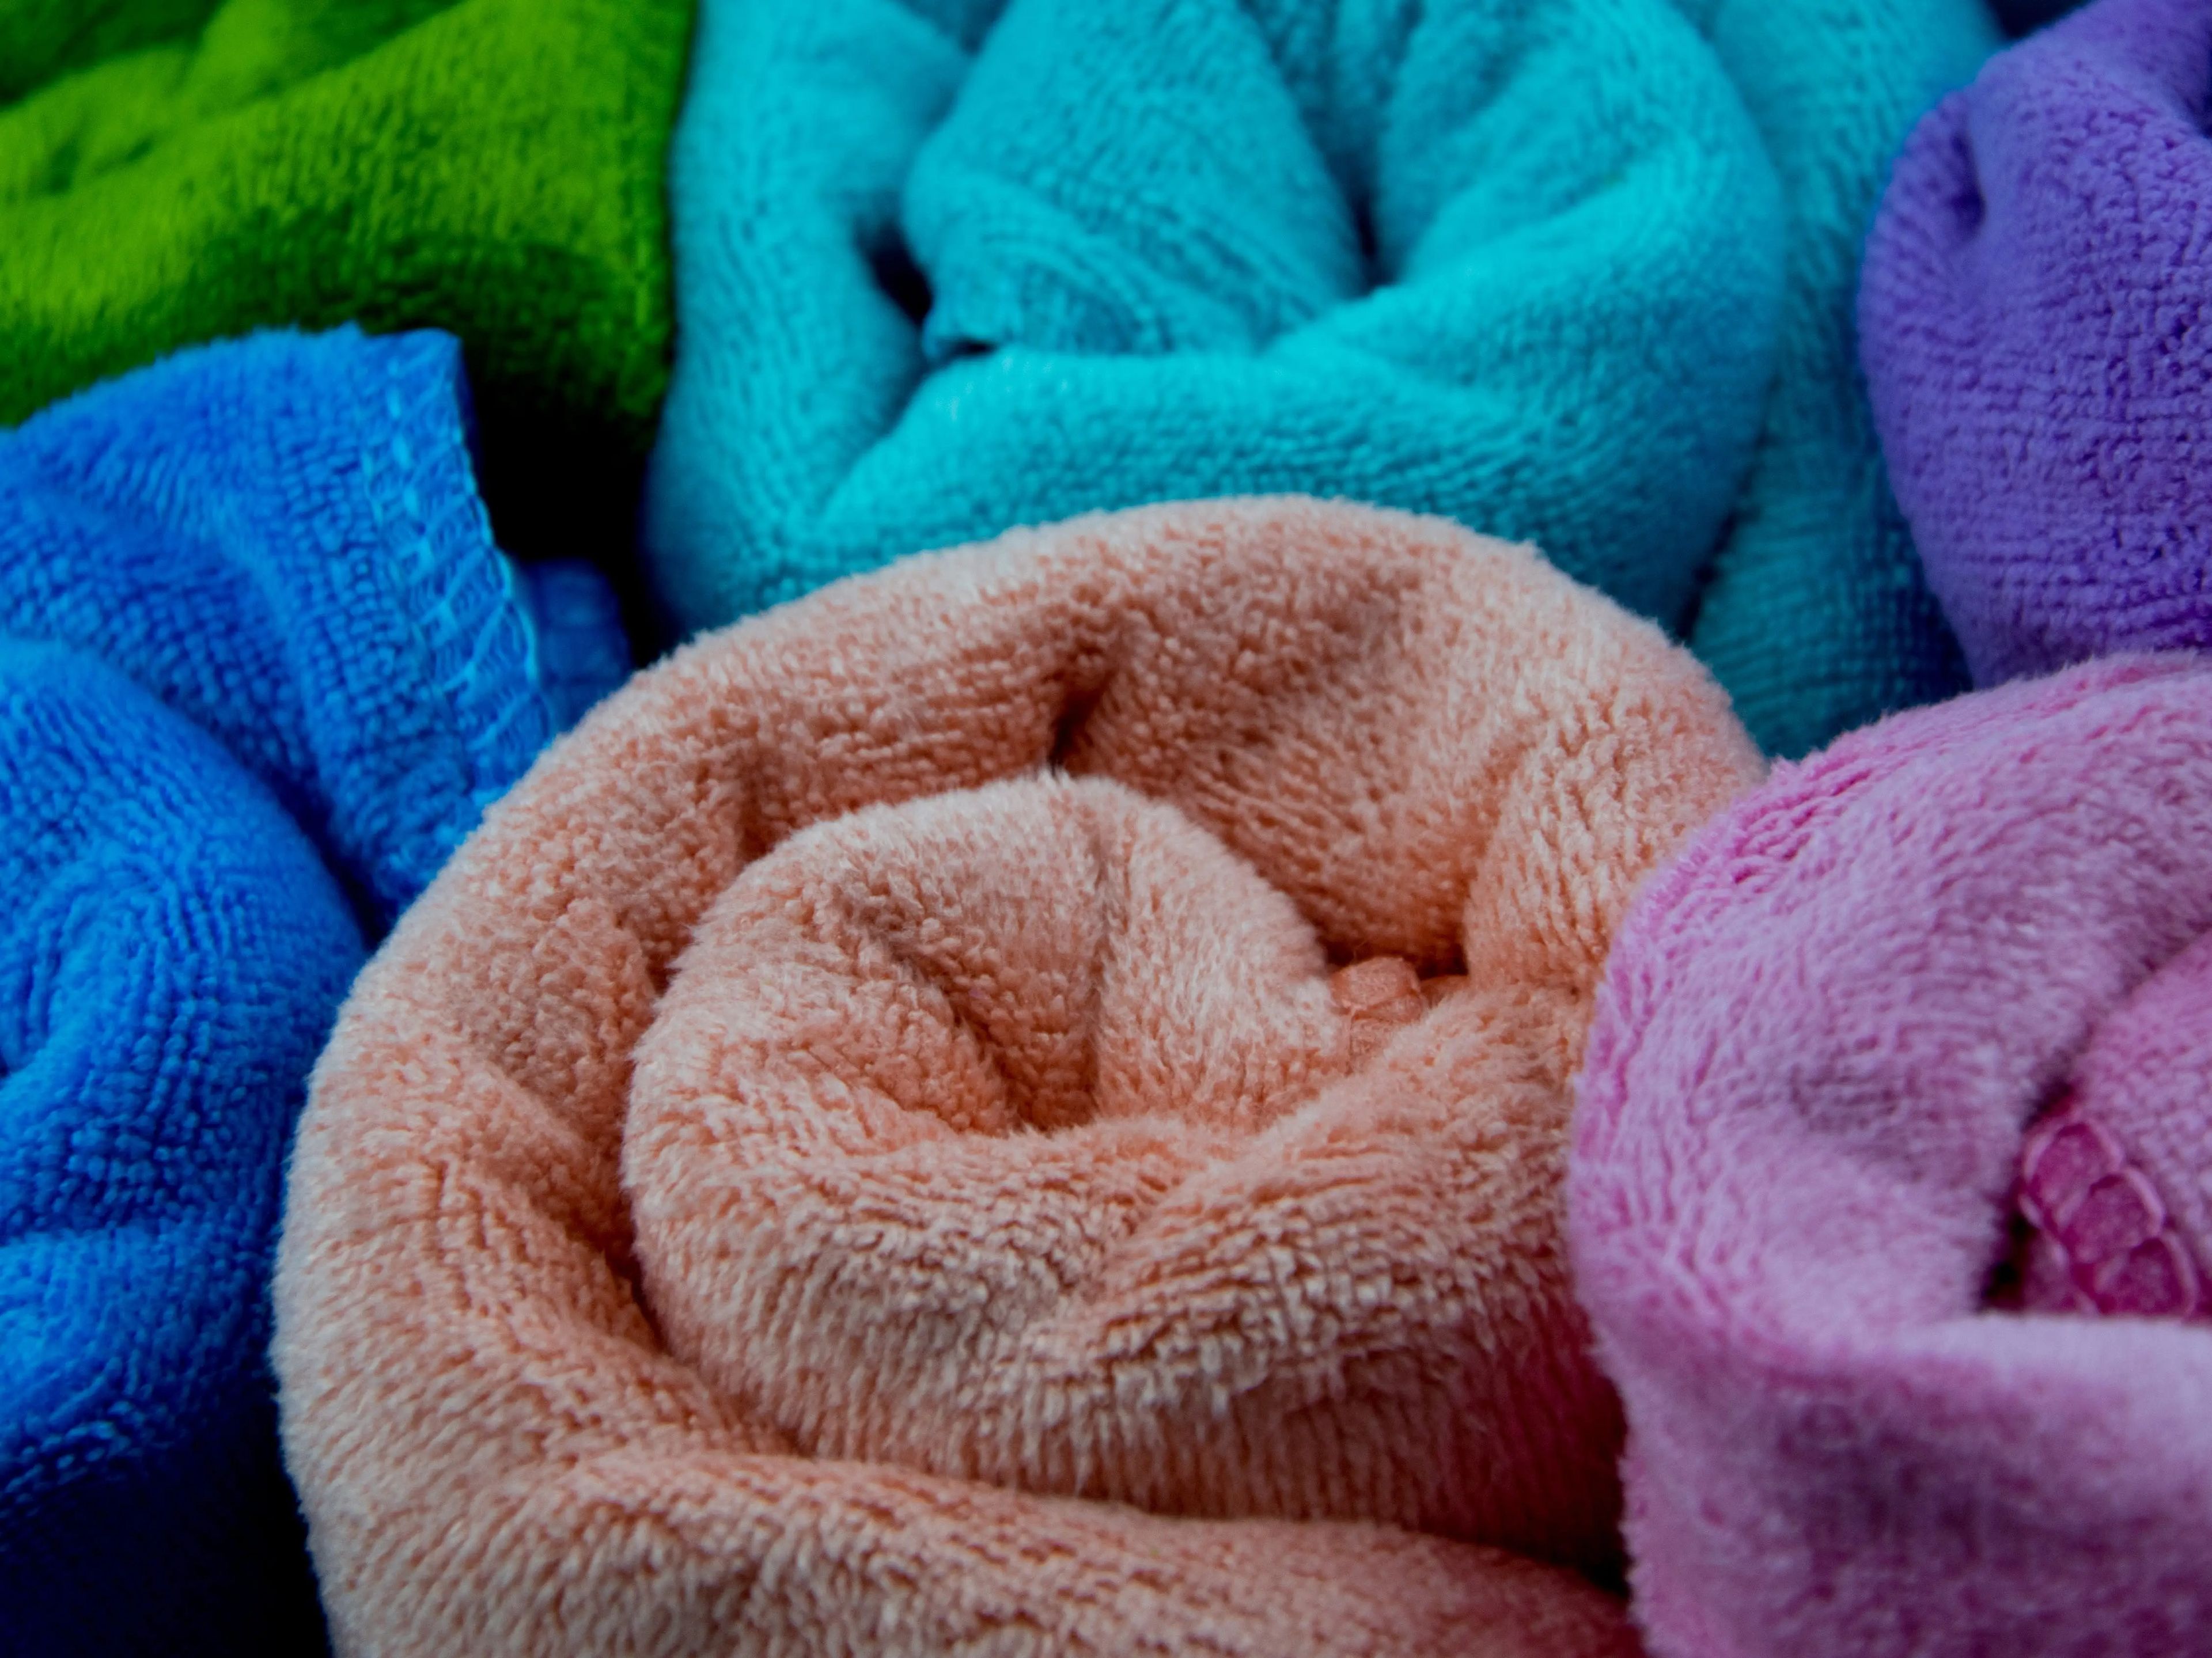 rolls of microfiber towels rolled up — closeup shot of multicolor towels